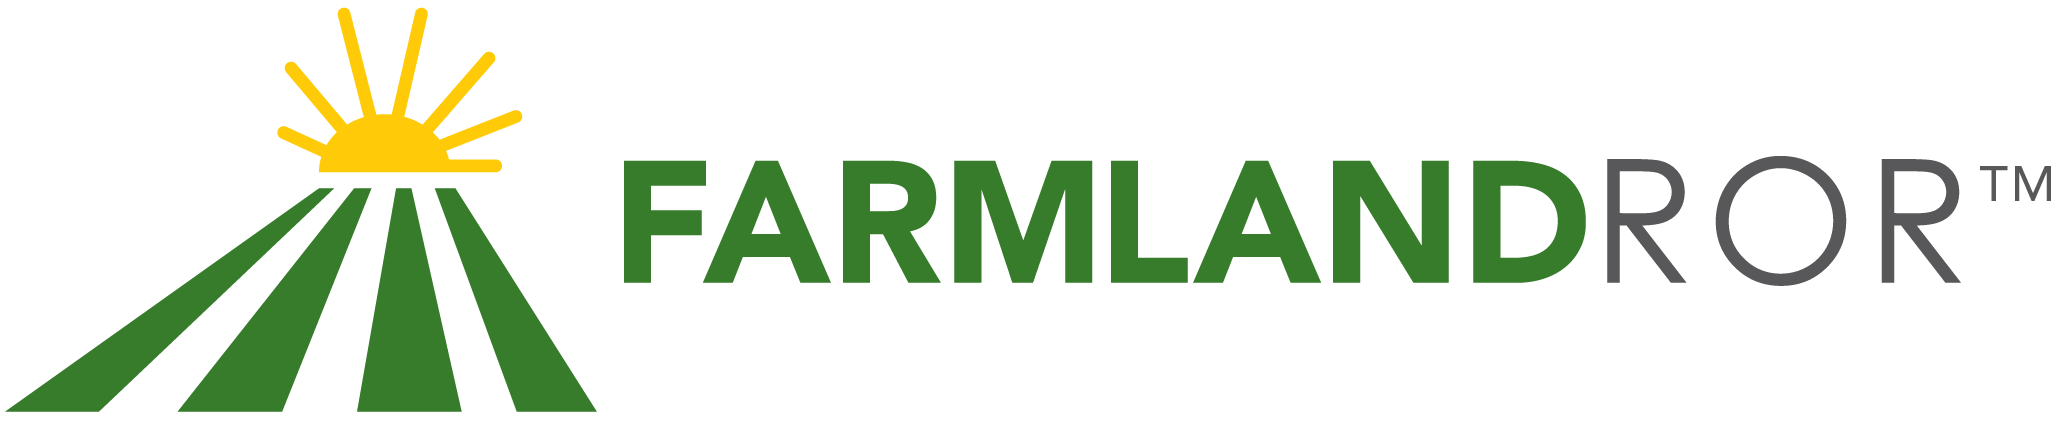 Farmland Investment Calculator | Farmland Agricultural Calculator [FREE] Logo